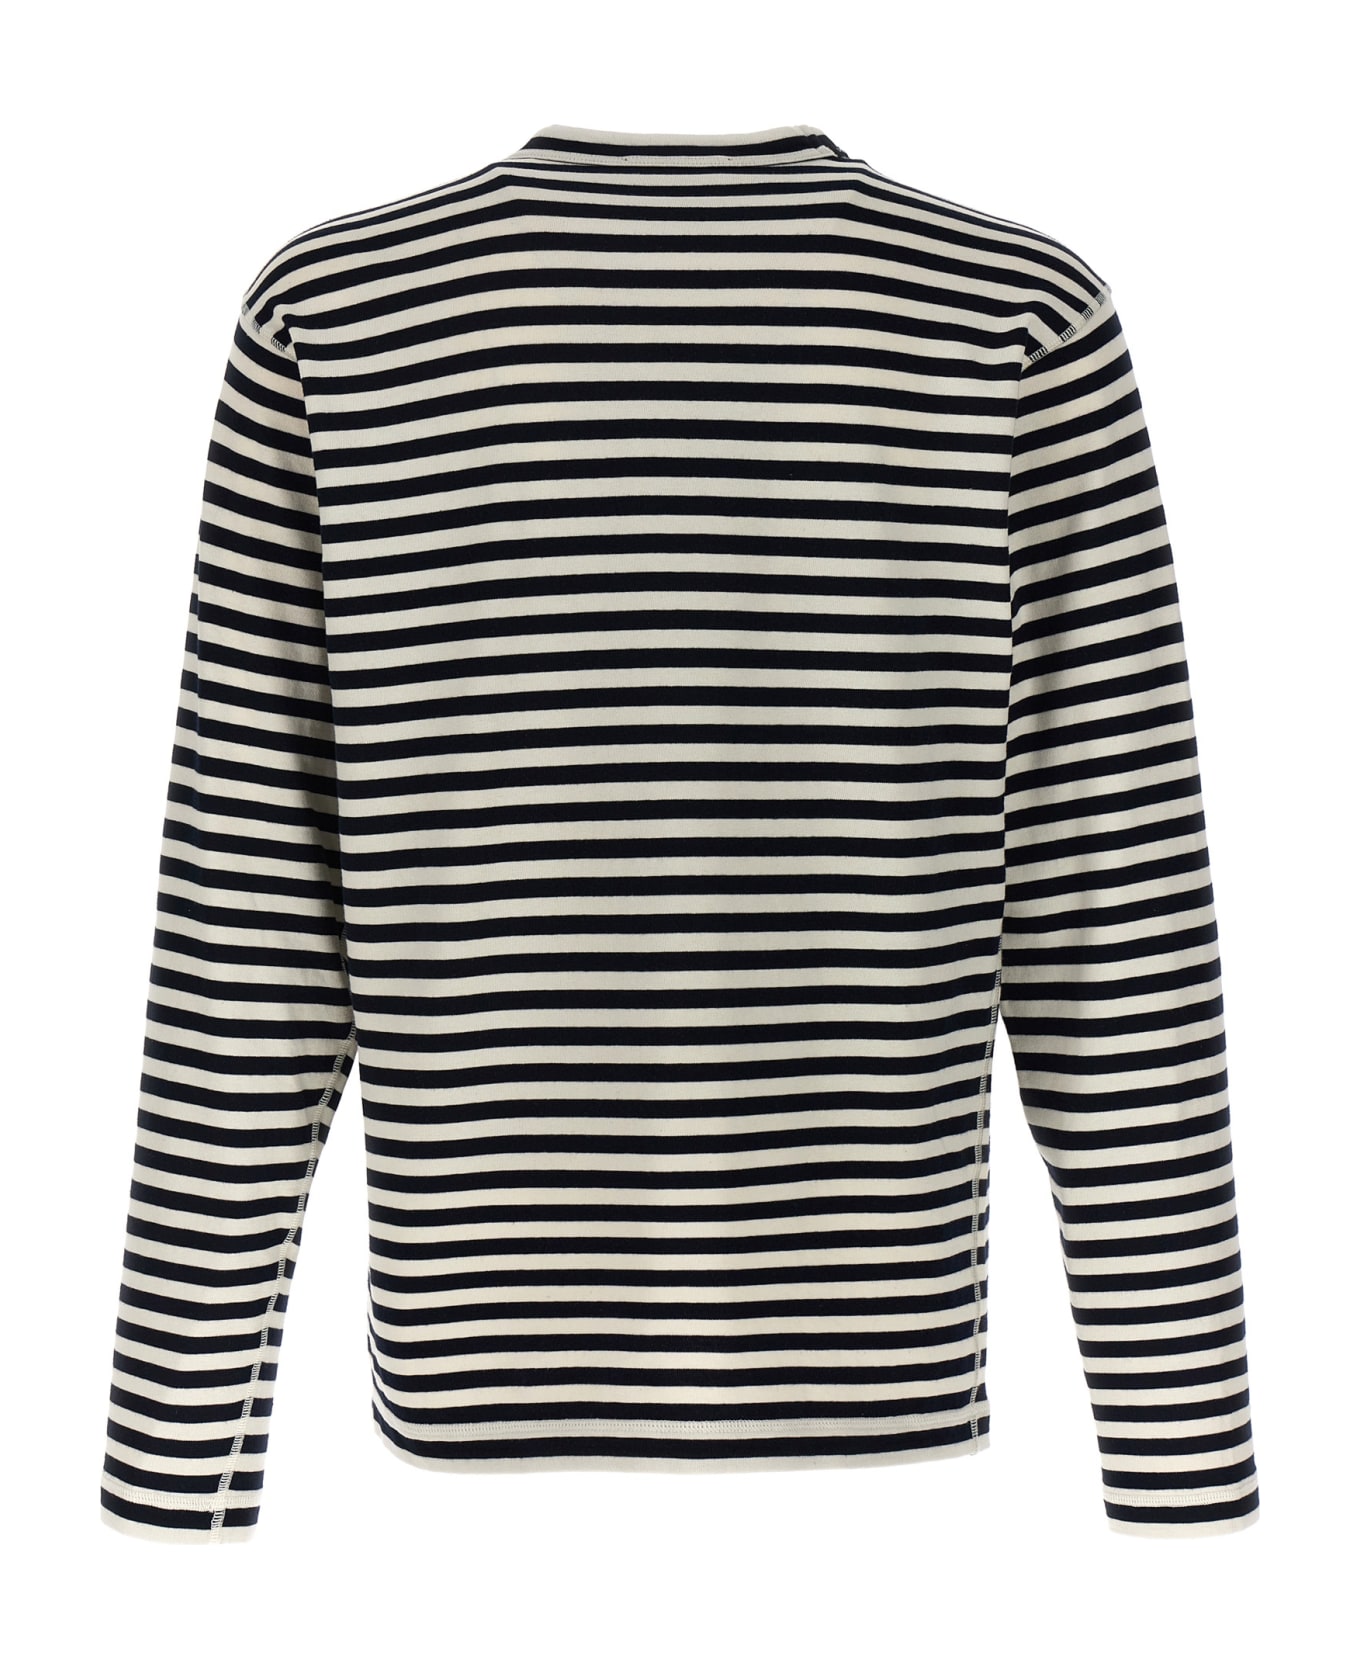 Dolce & Gabbana Striped Crewneck T-shirt - Black